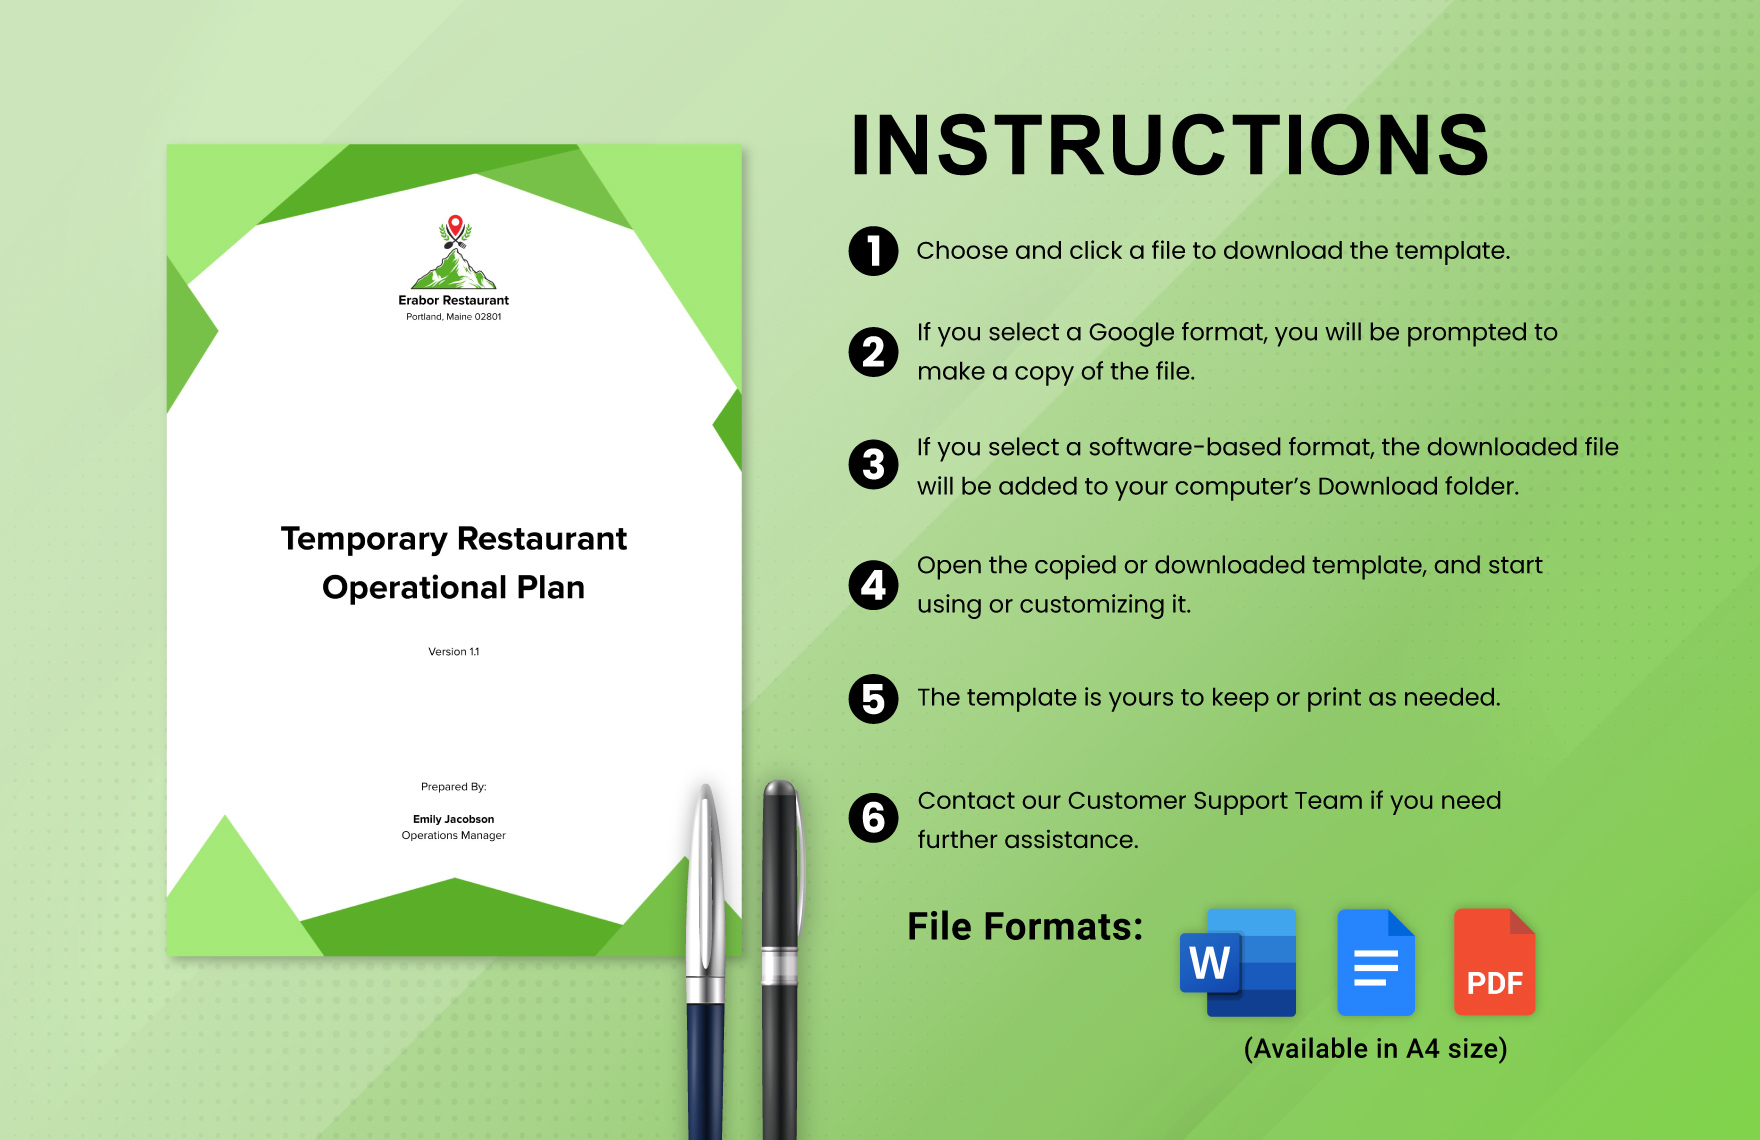 Temporary Restaurant Operational Plan Template